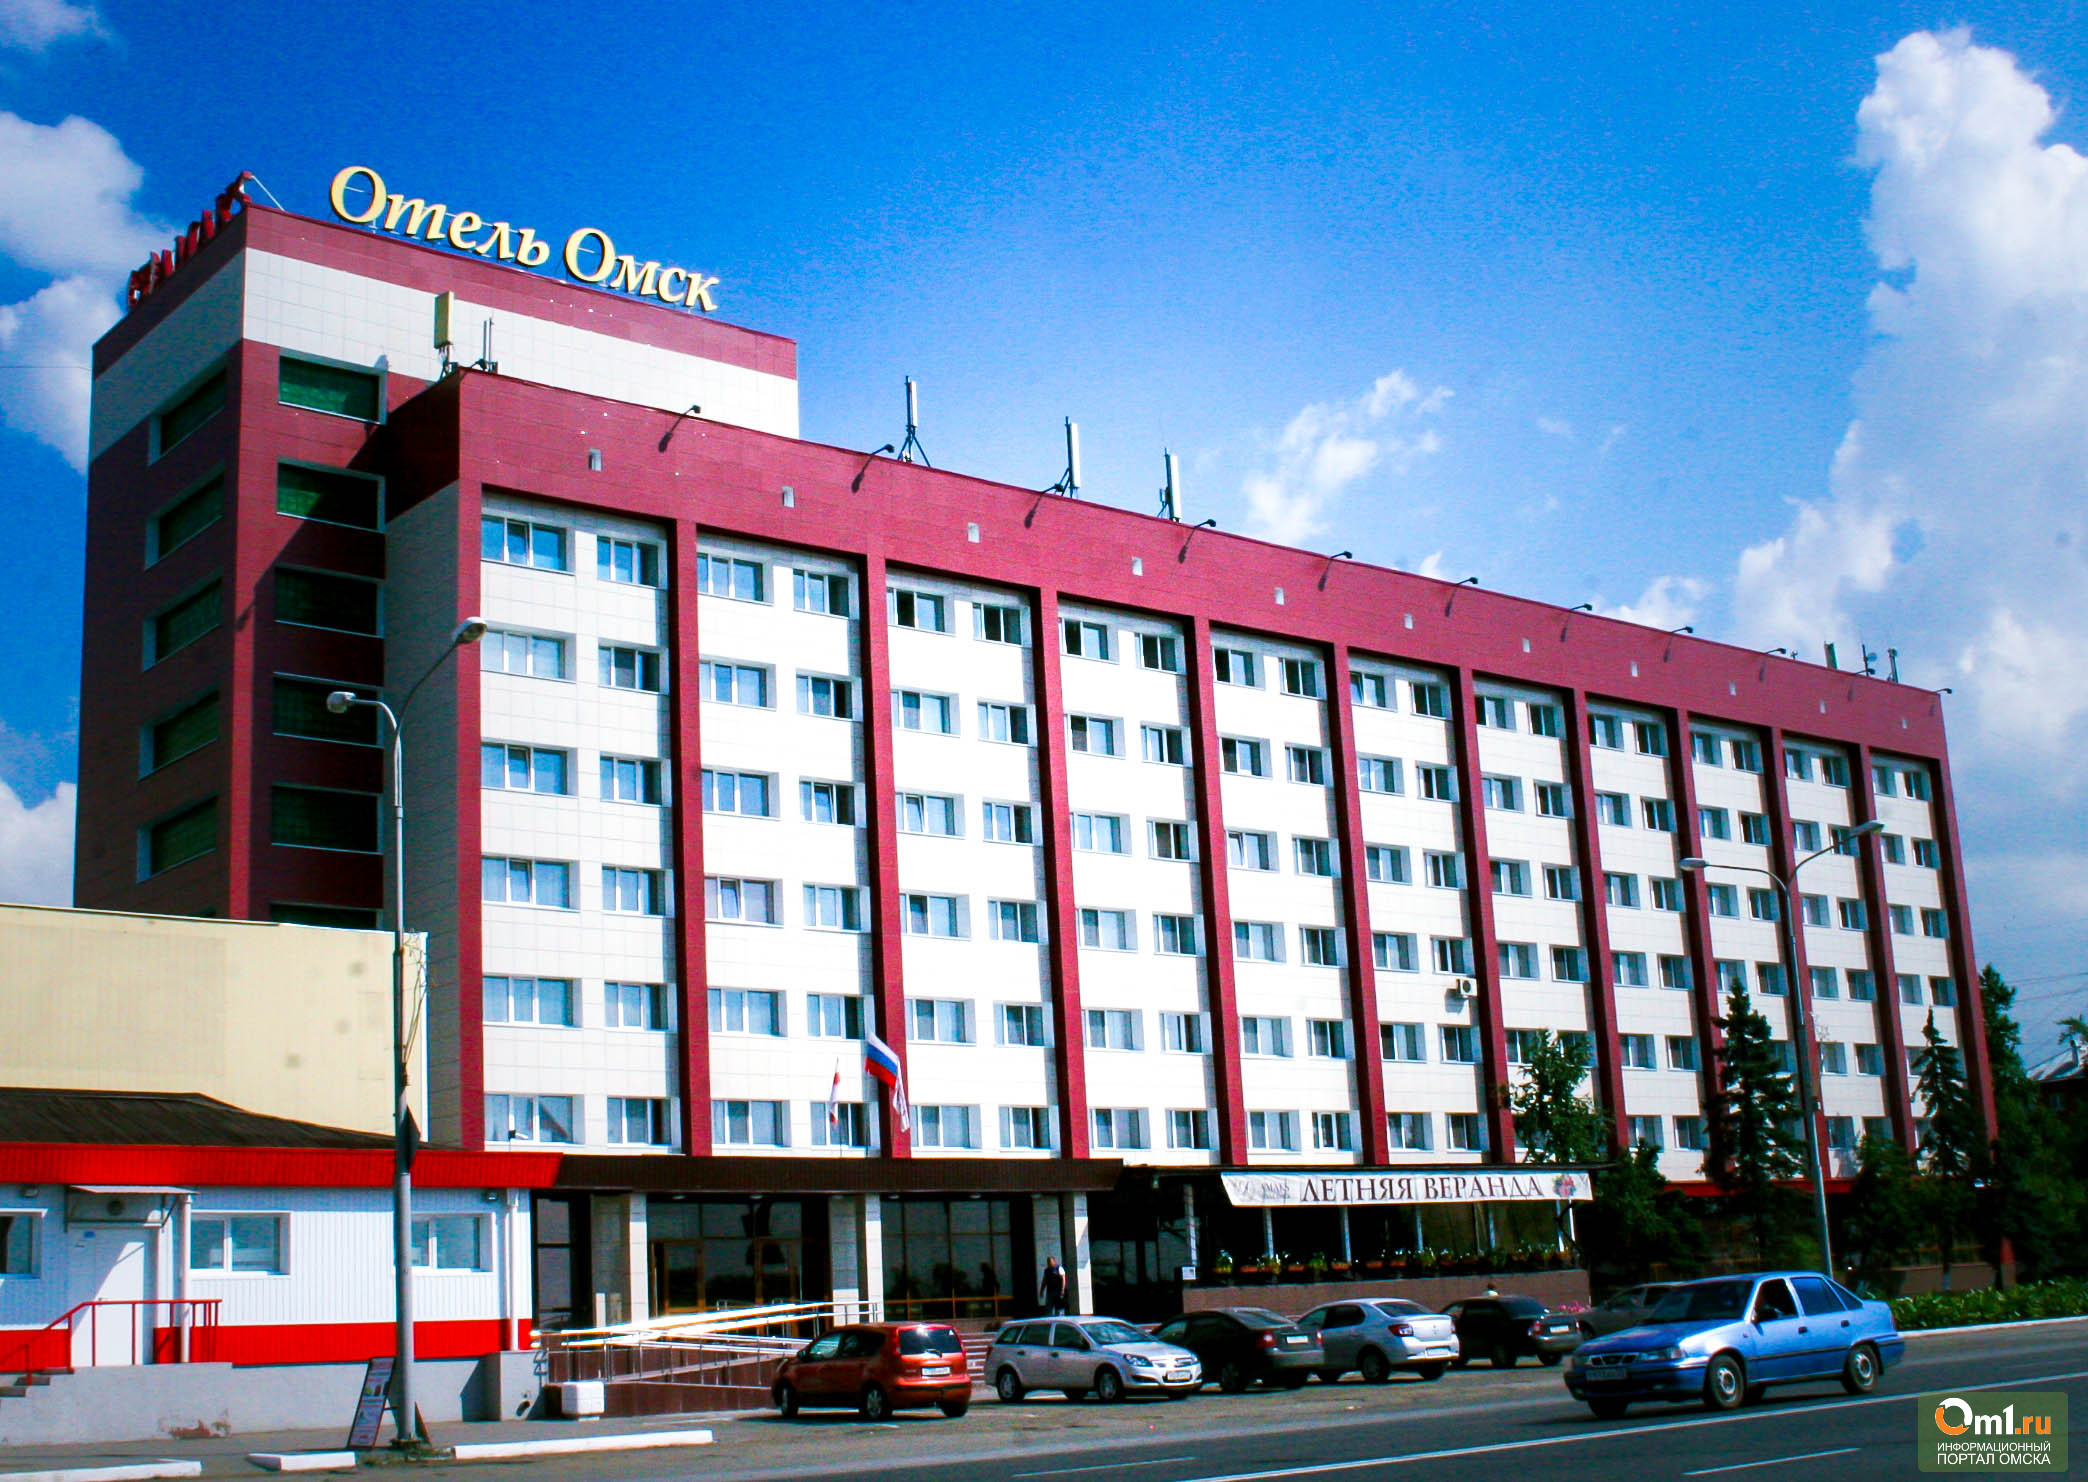 Гостиница омская